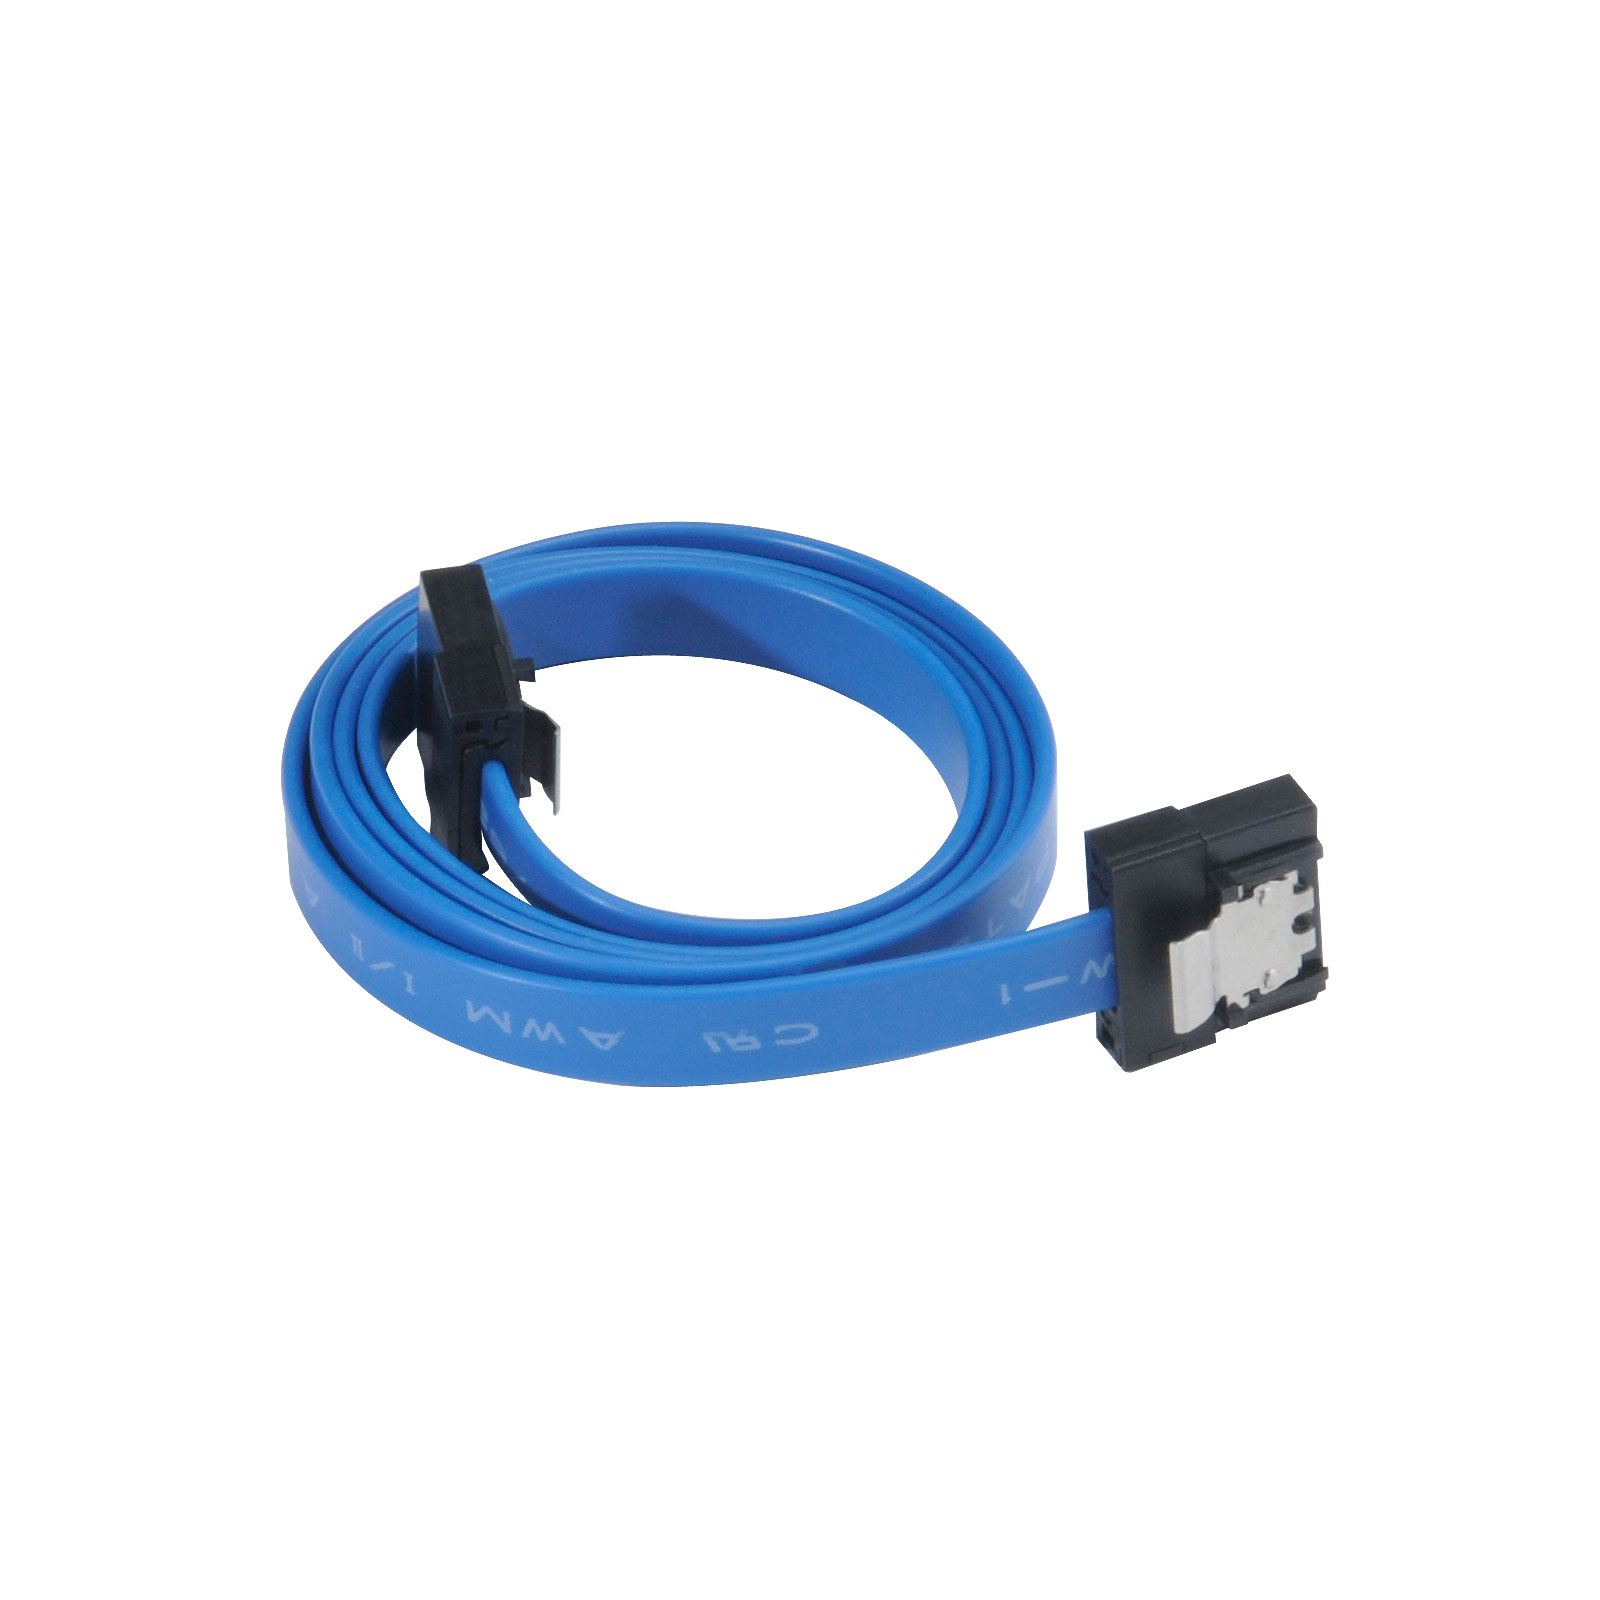 Akasa super slim sata rev 3.0 data cable with securing latches - 30cm, blue, *SATAM